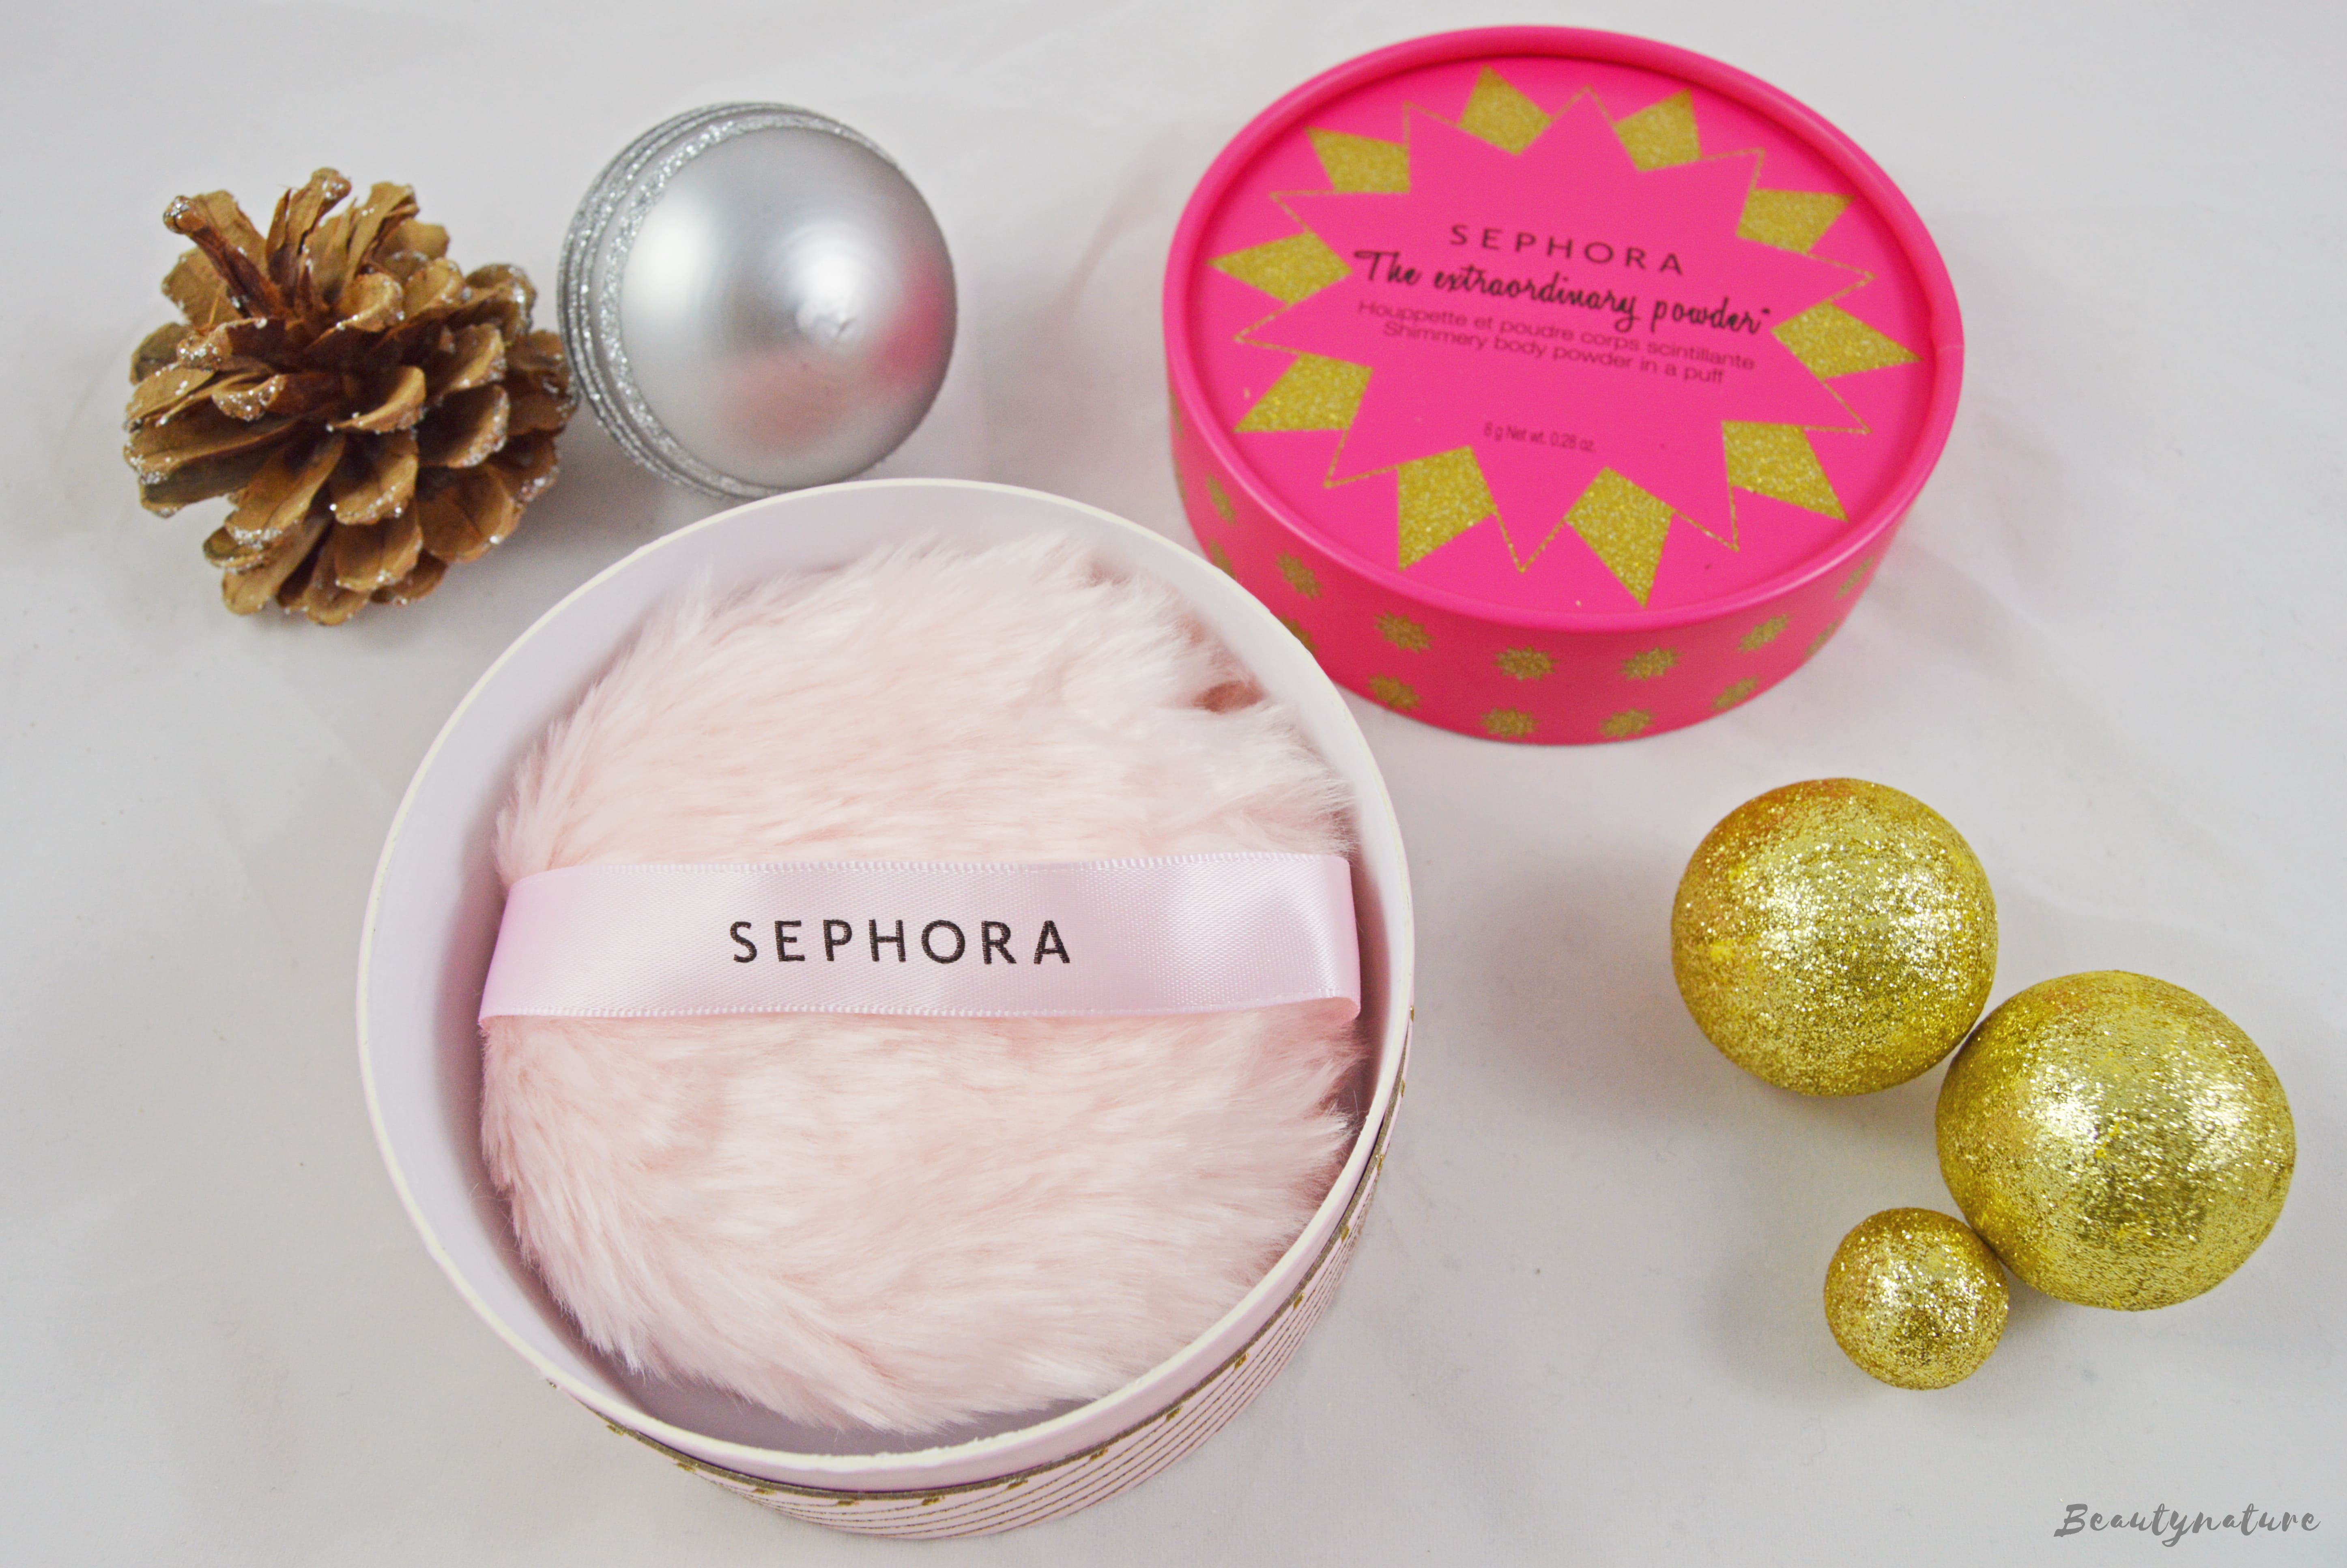 Sephora - The extraordinary powder